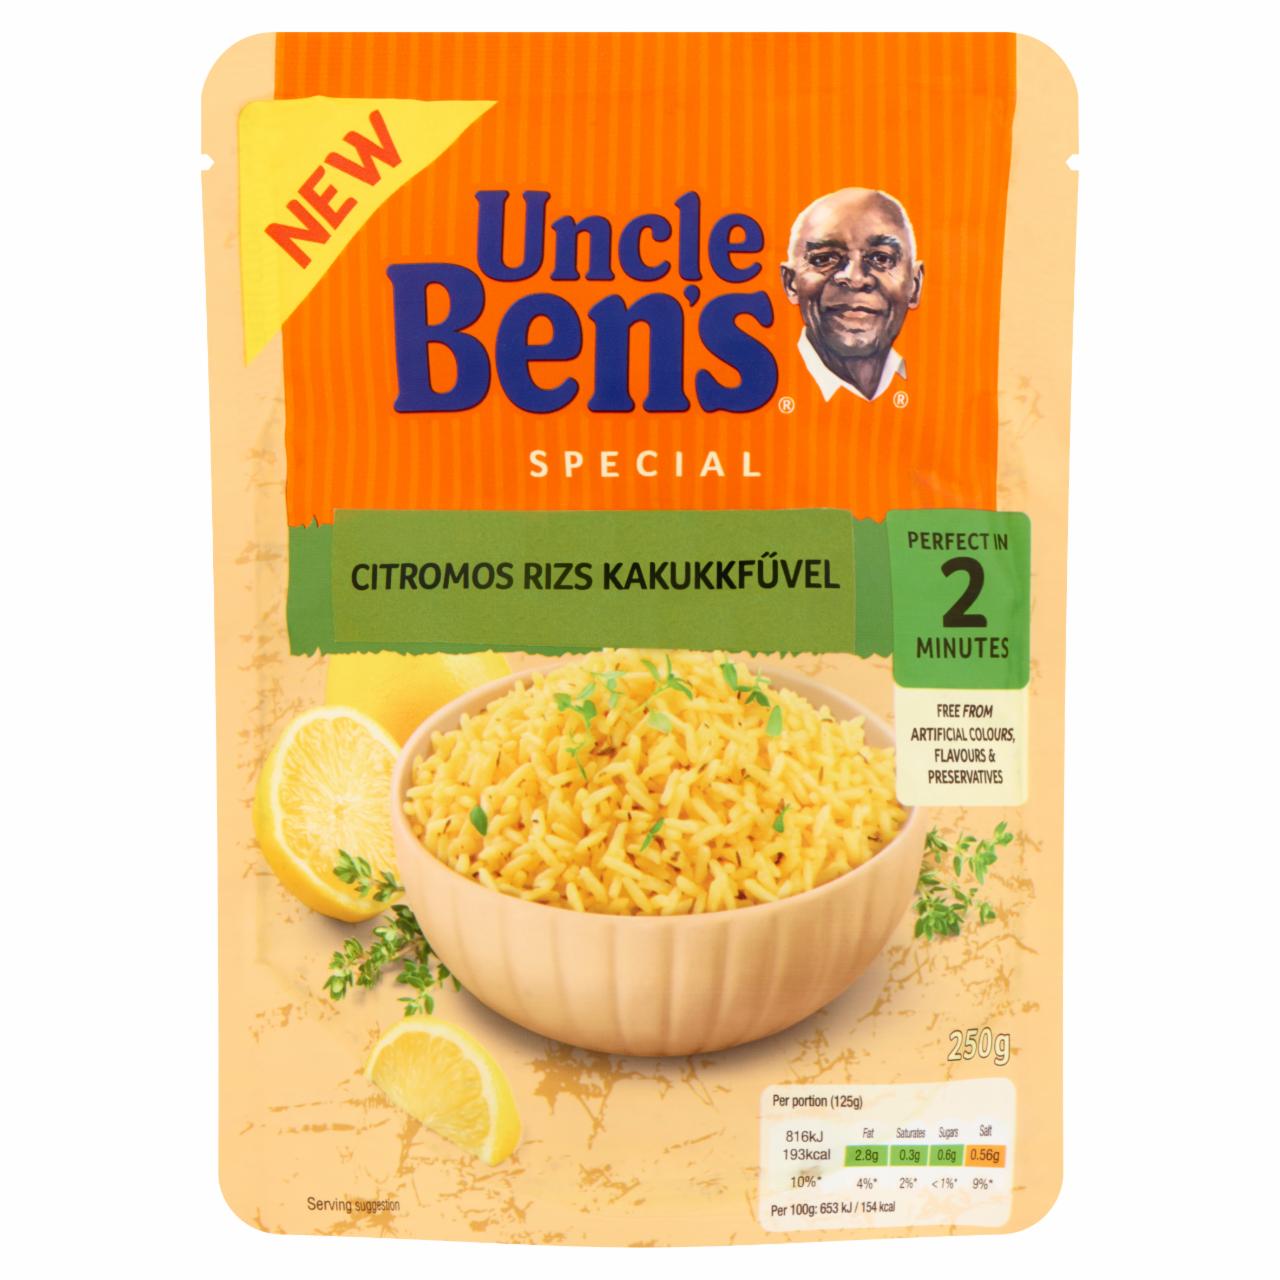 Képek - Uncle Ben's citromos rizs kakukkfűvel 250 g